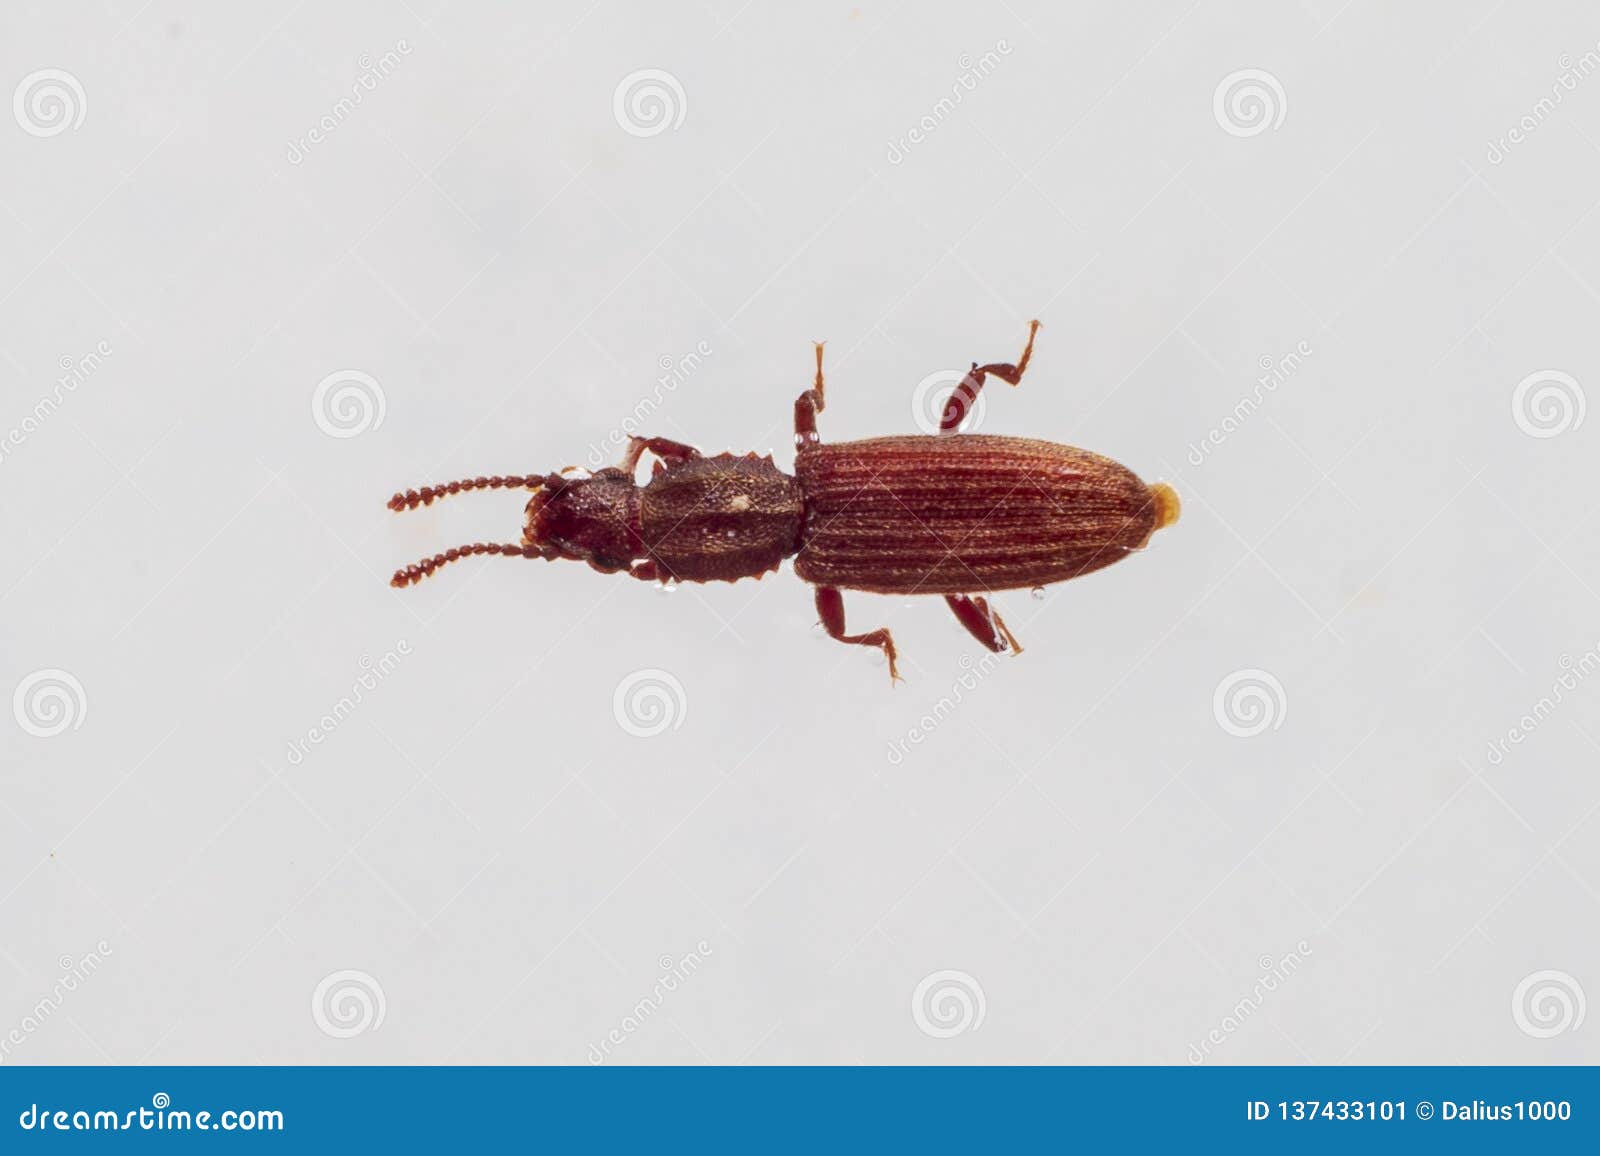 merchant grain beetle in white background walking. oryzaephilus mercator